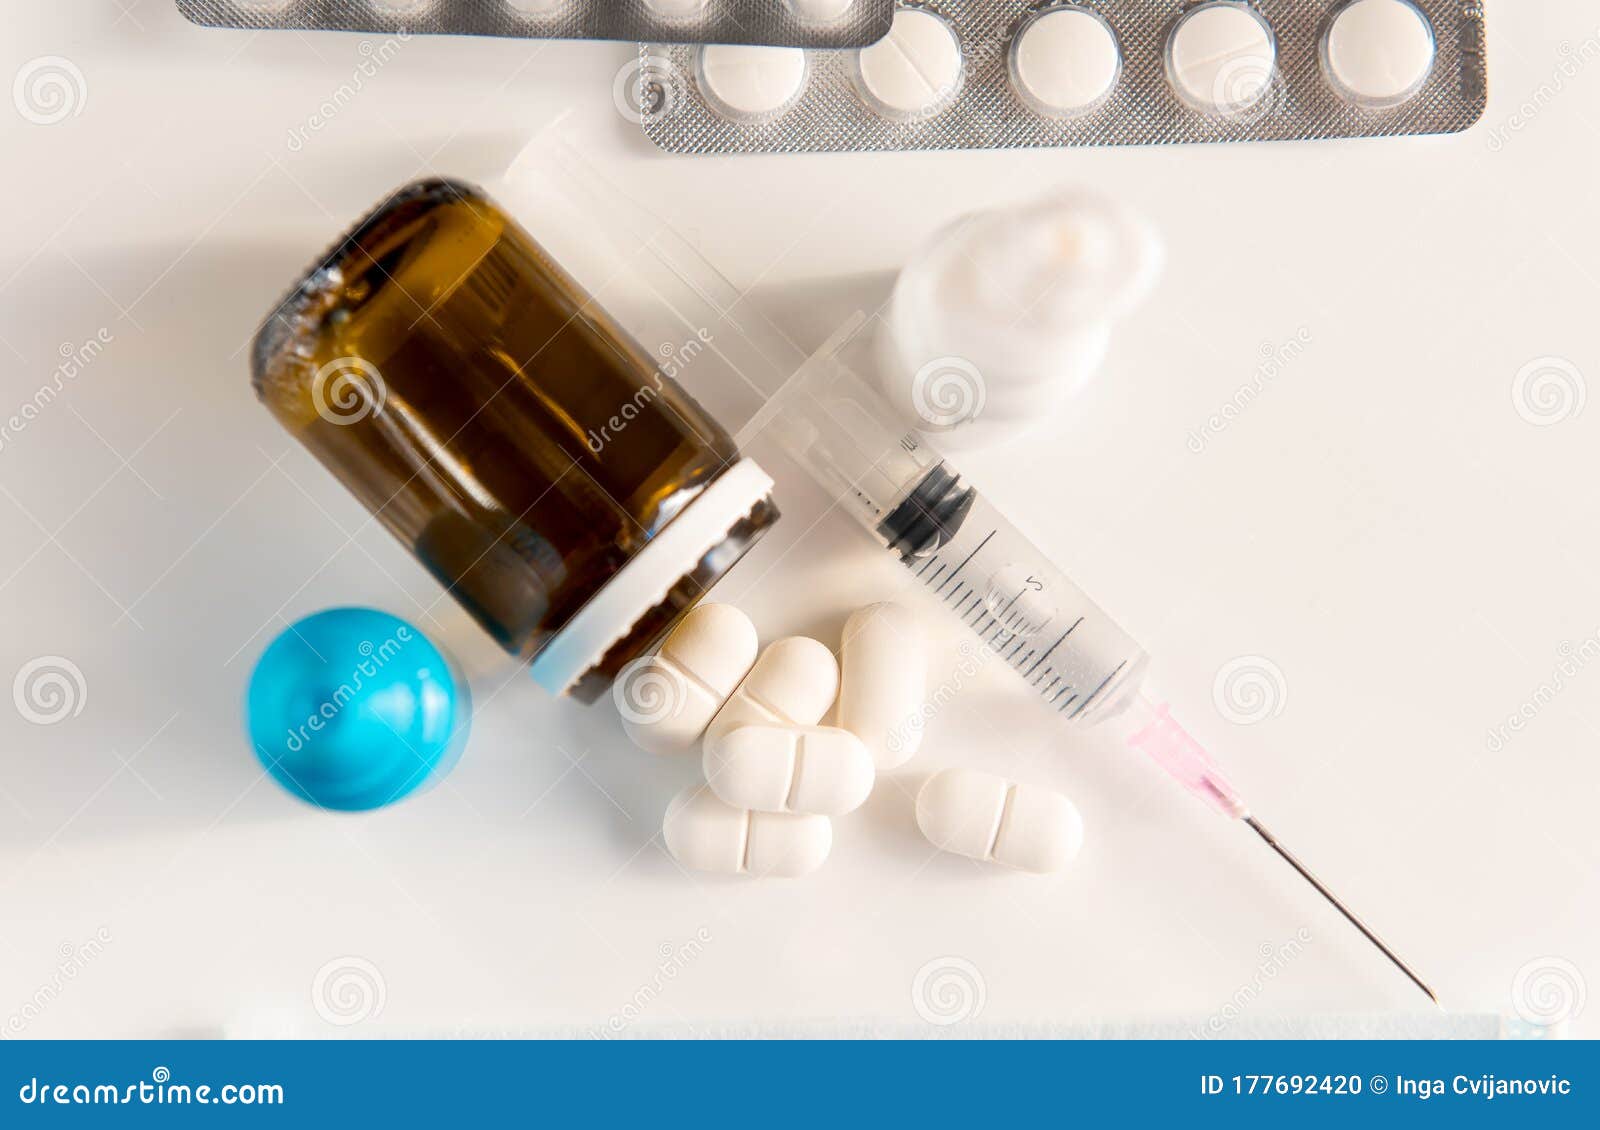 pandemic of coronavirus covid-19. spray, pills, drops and syringe on white background. medicina, quarantine.